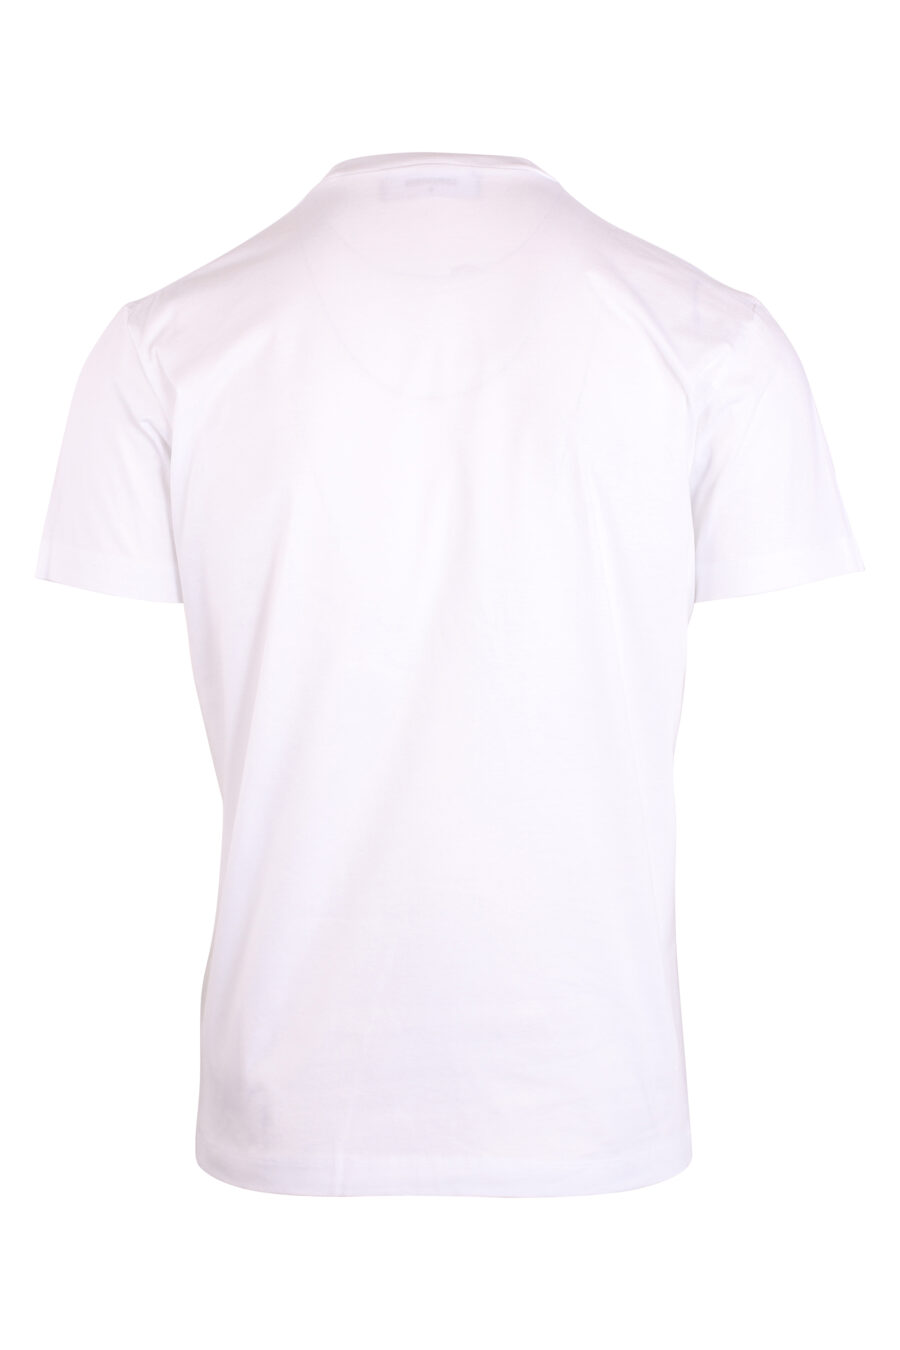 Camiseta blanca con logo "icon sunset" - IMG 8895